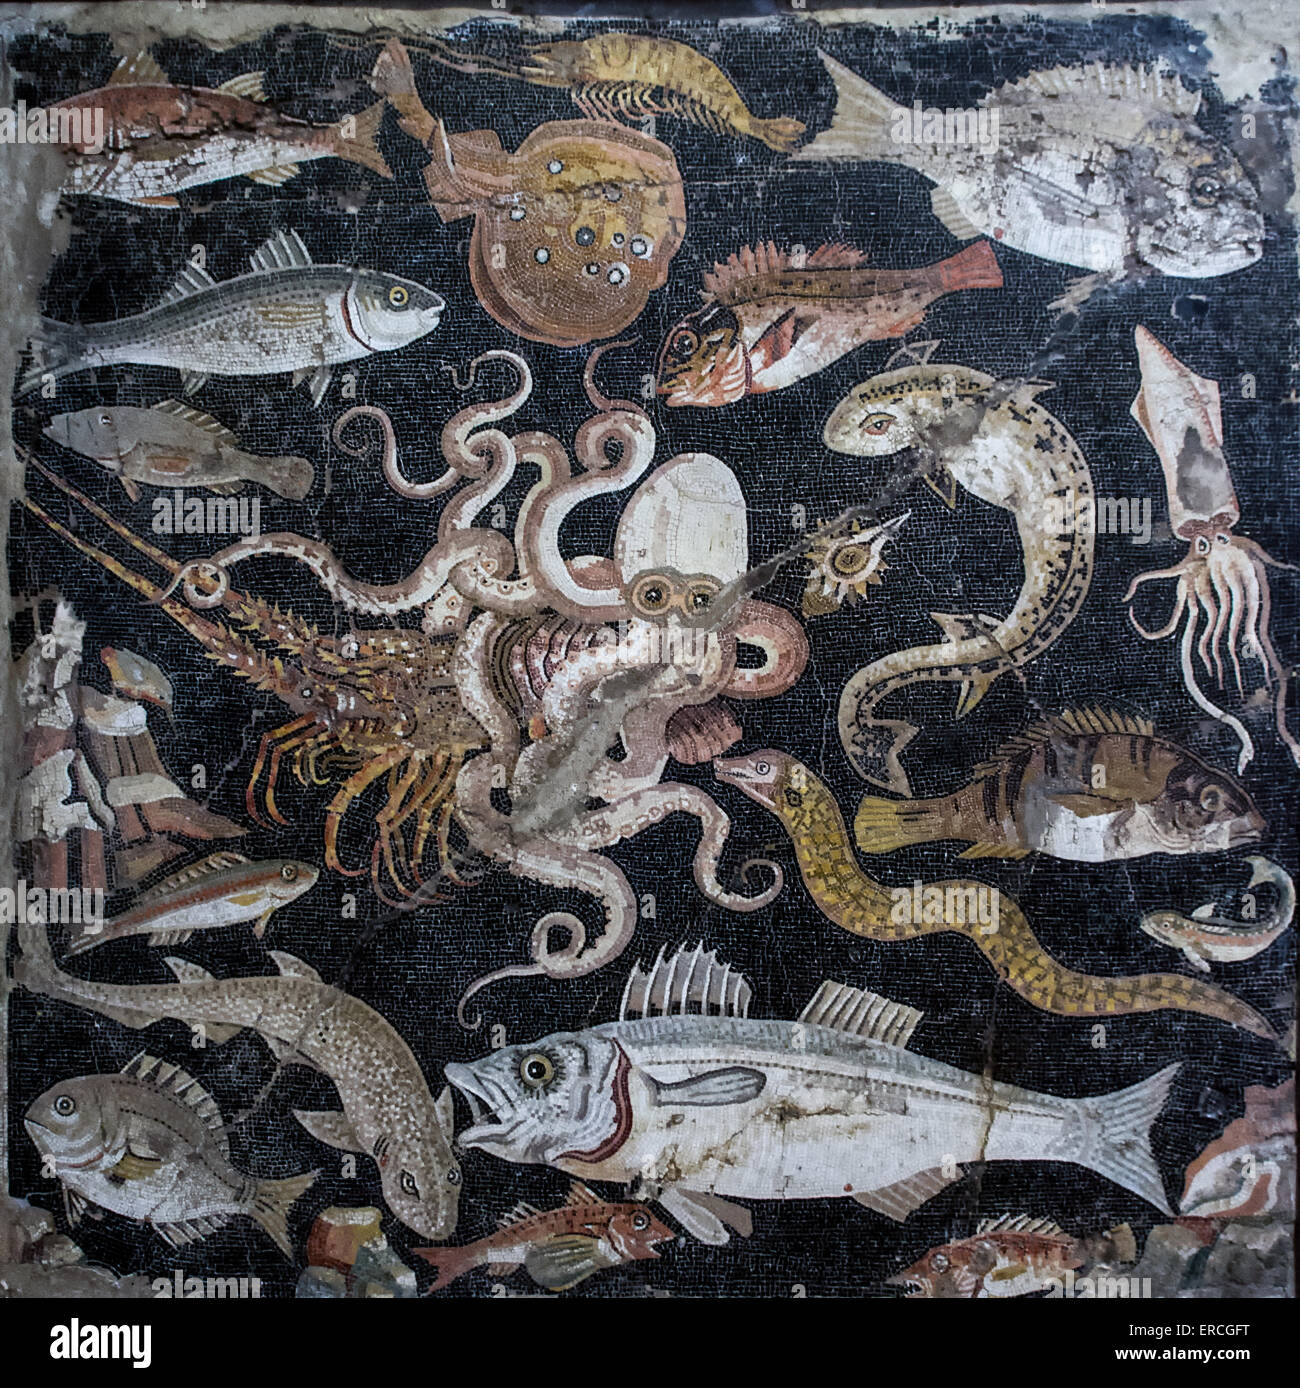 Mosaic of marine life, Pompeii, Italy. Stock Photo